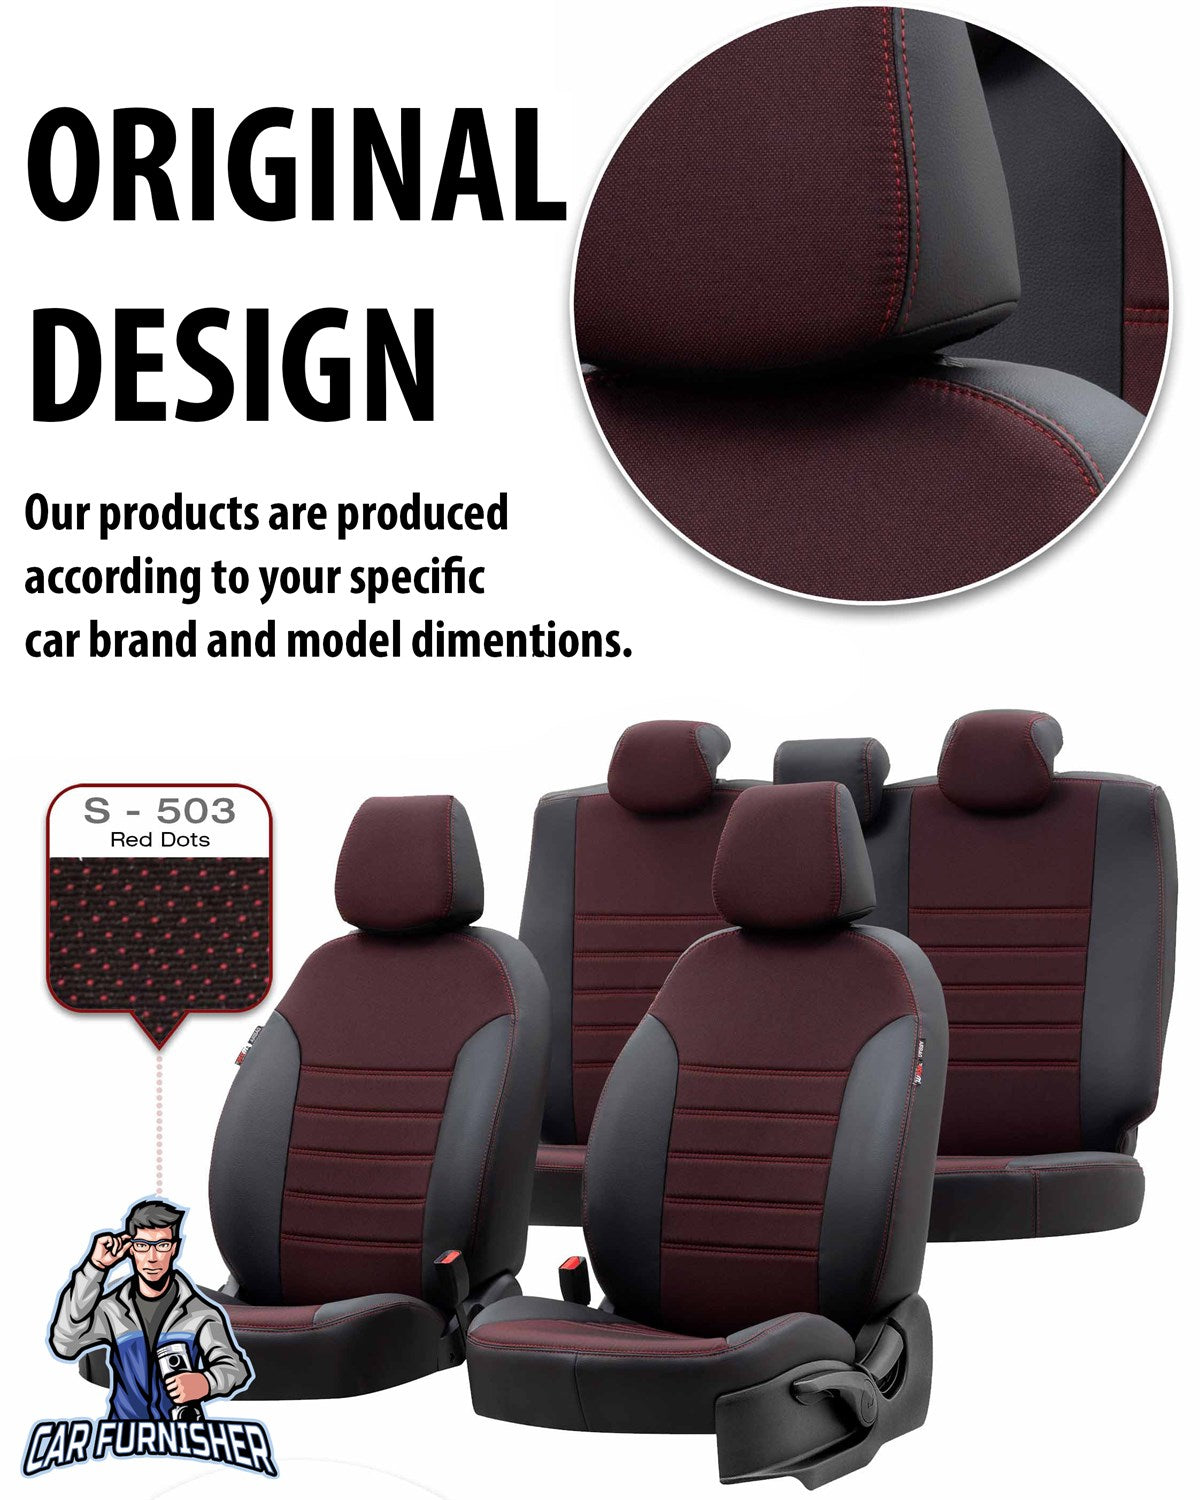 Landrover Freelander Car Seat Covers 1998-2012 Paris Design Black Leather & Jacquard Fabric